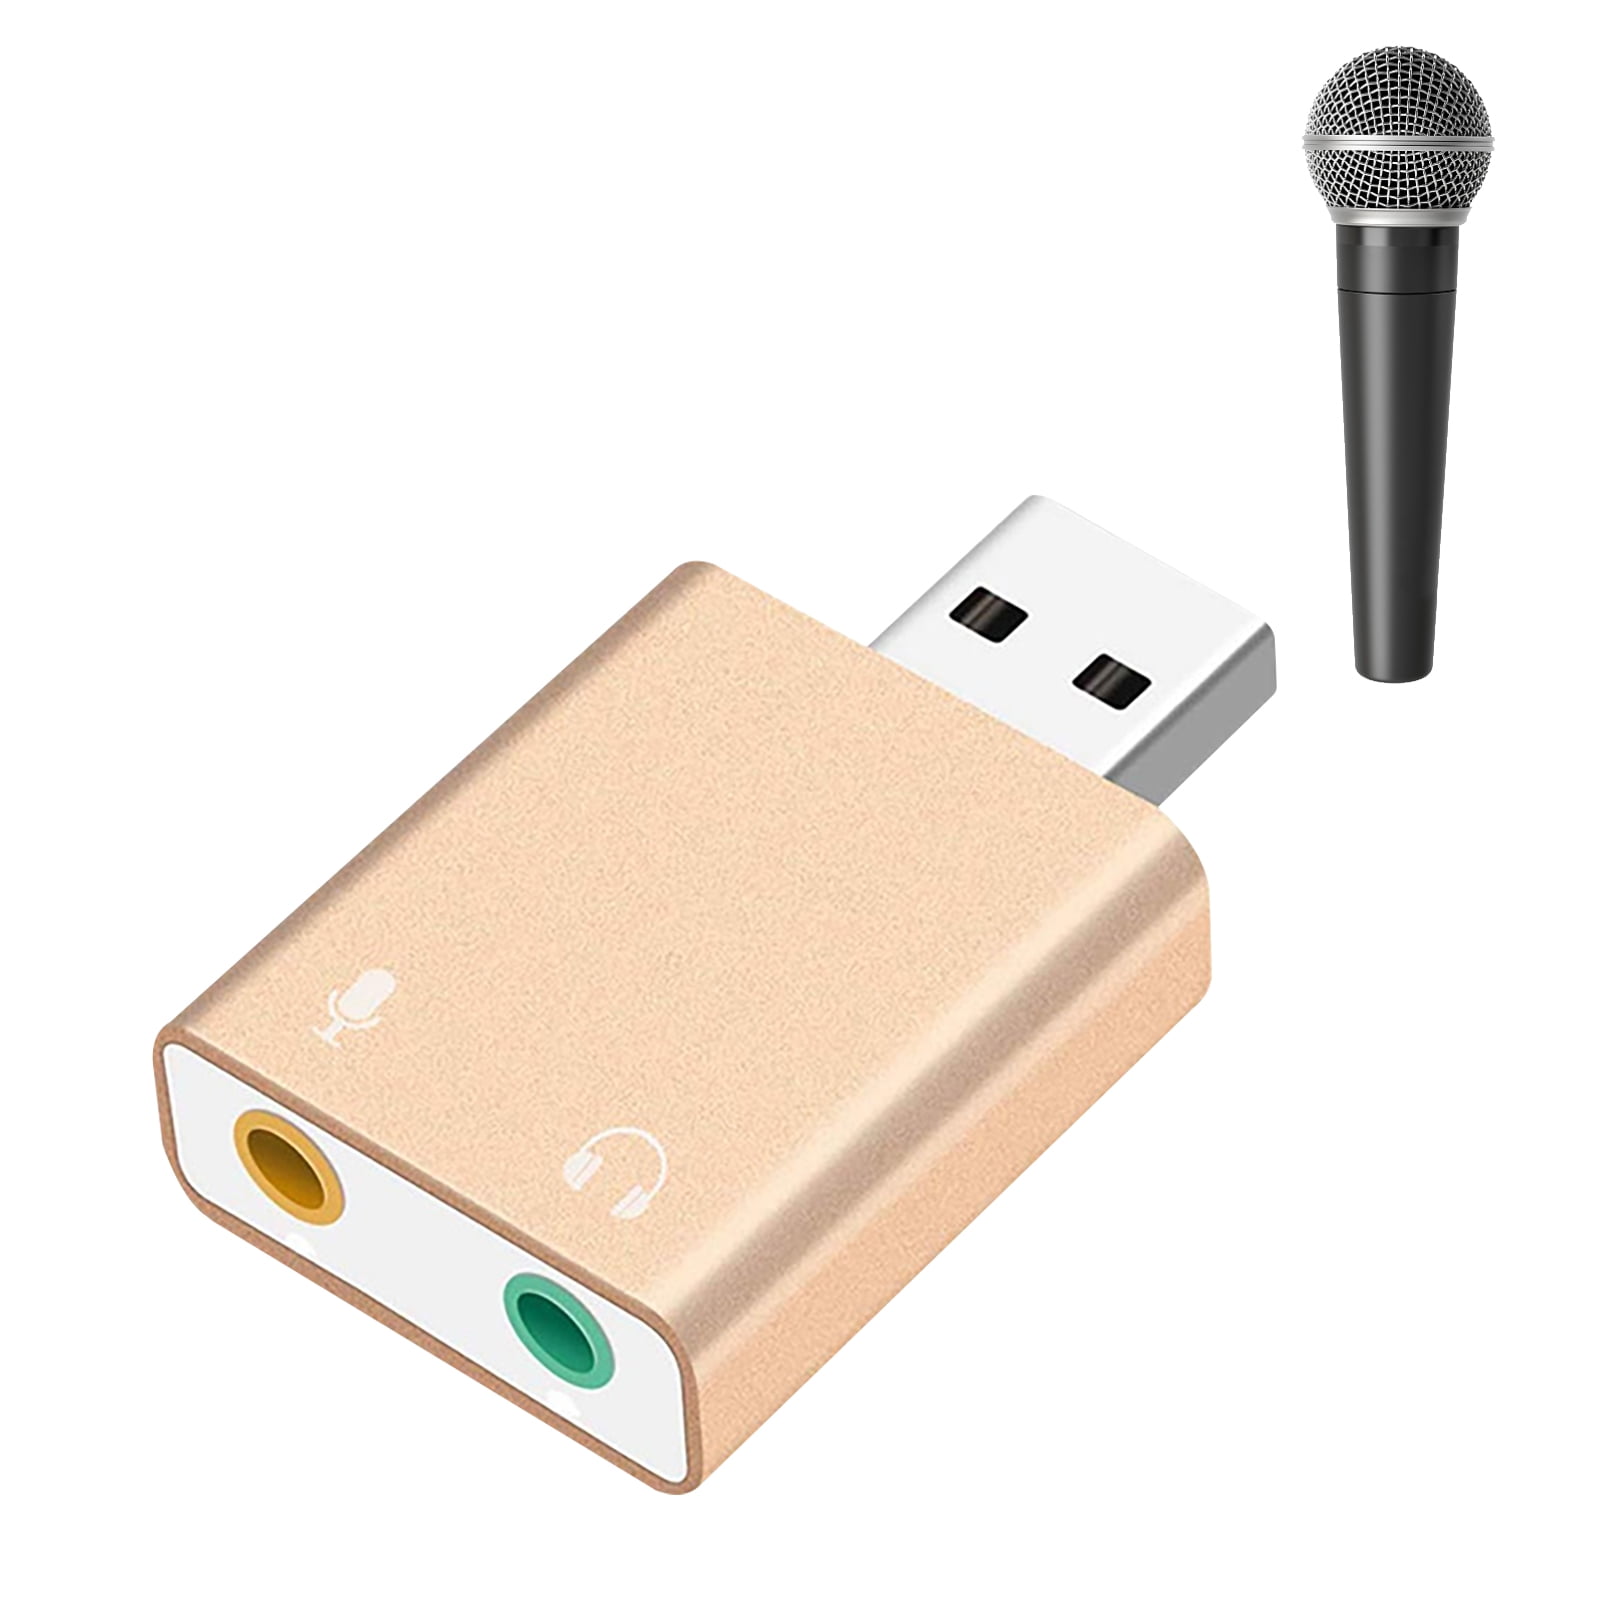 Auswaur Aluminum USB External Stereo Sound Adapter Virtual 7.1 Microphone Converter for Windows,Mac,PC,Laptops,Desktops Grey USB Audio Adapter External Stereo Sound Card with 3.5mm Headphone 